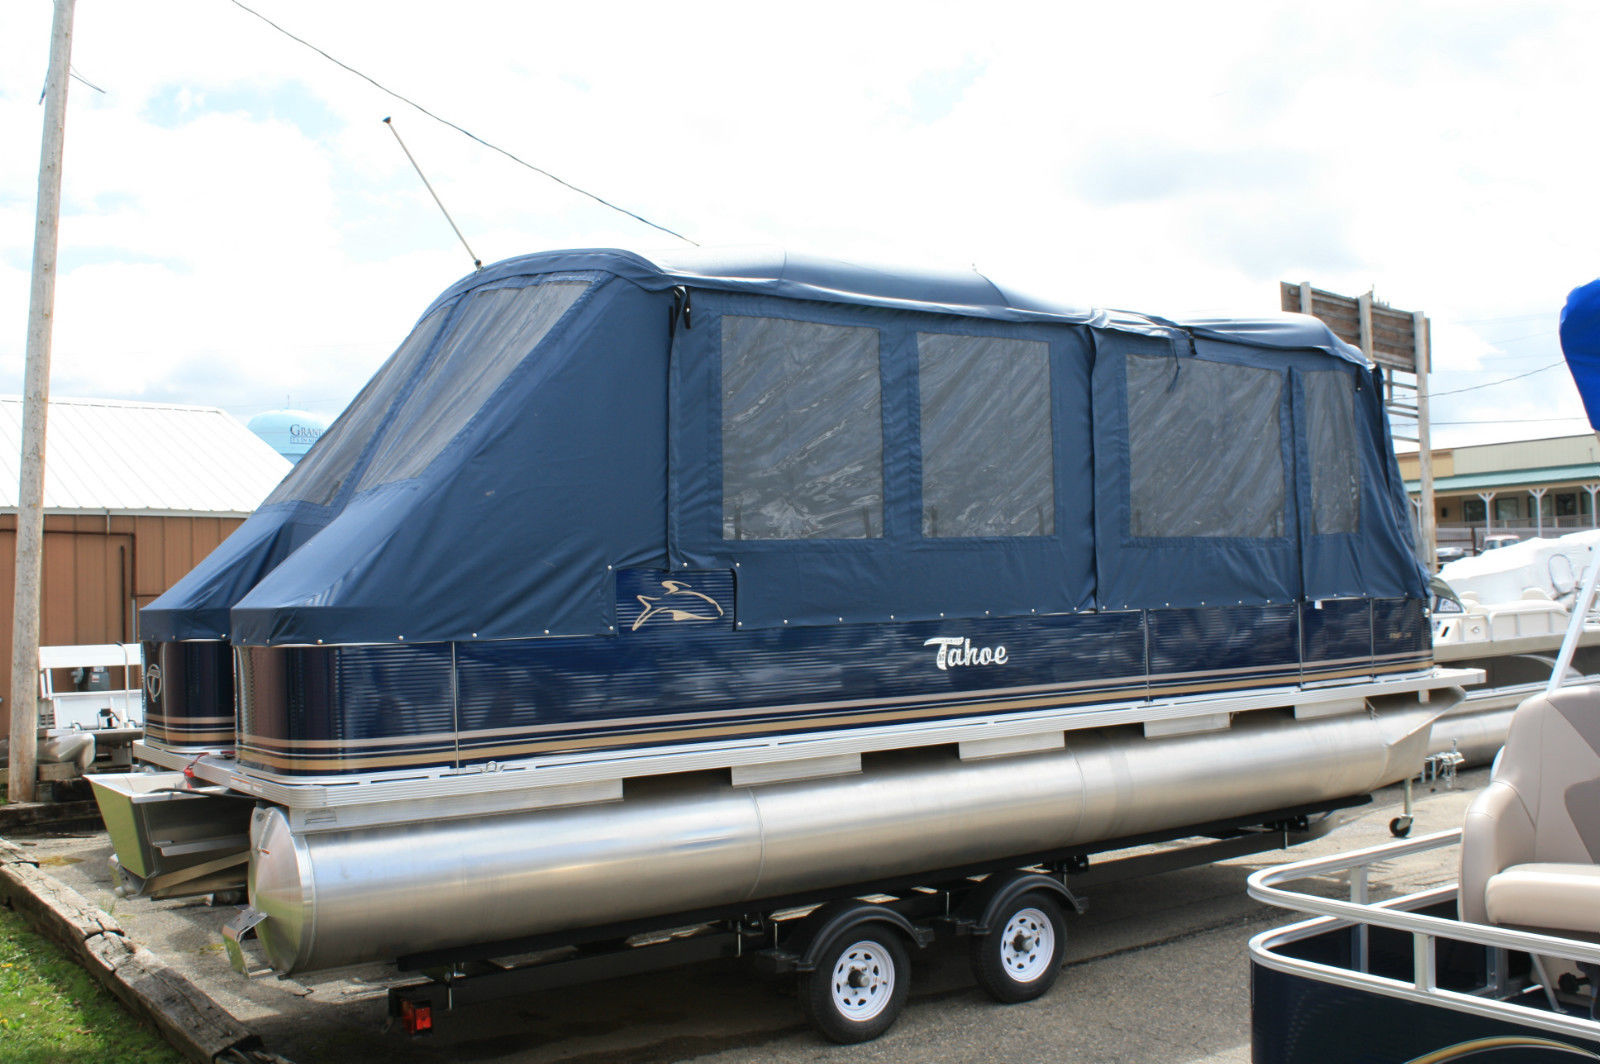 New 24 Ft High End Pontoon Boat With Camper Enclosure 2013 ...